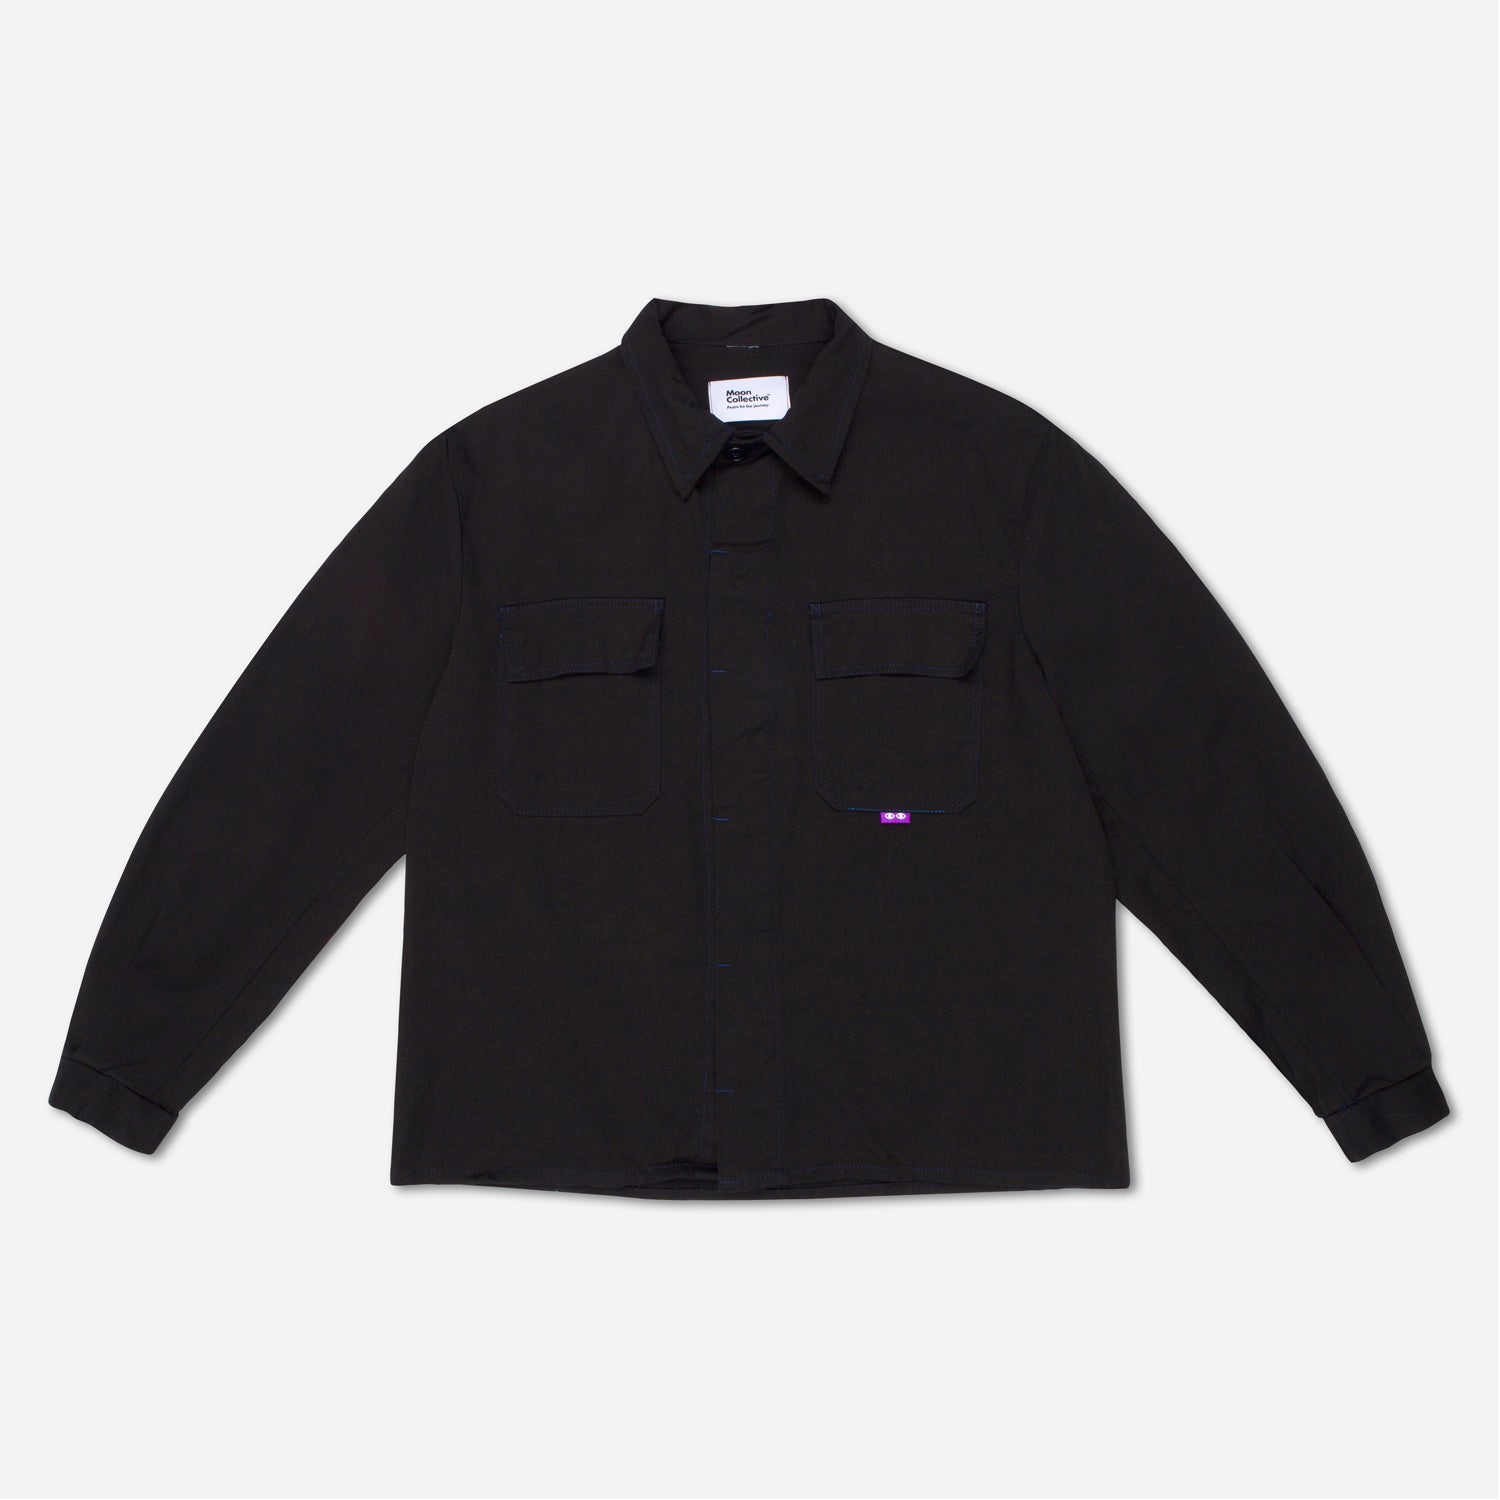 Black Chore Jacket 8B - S/M